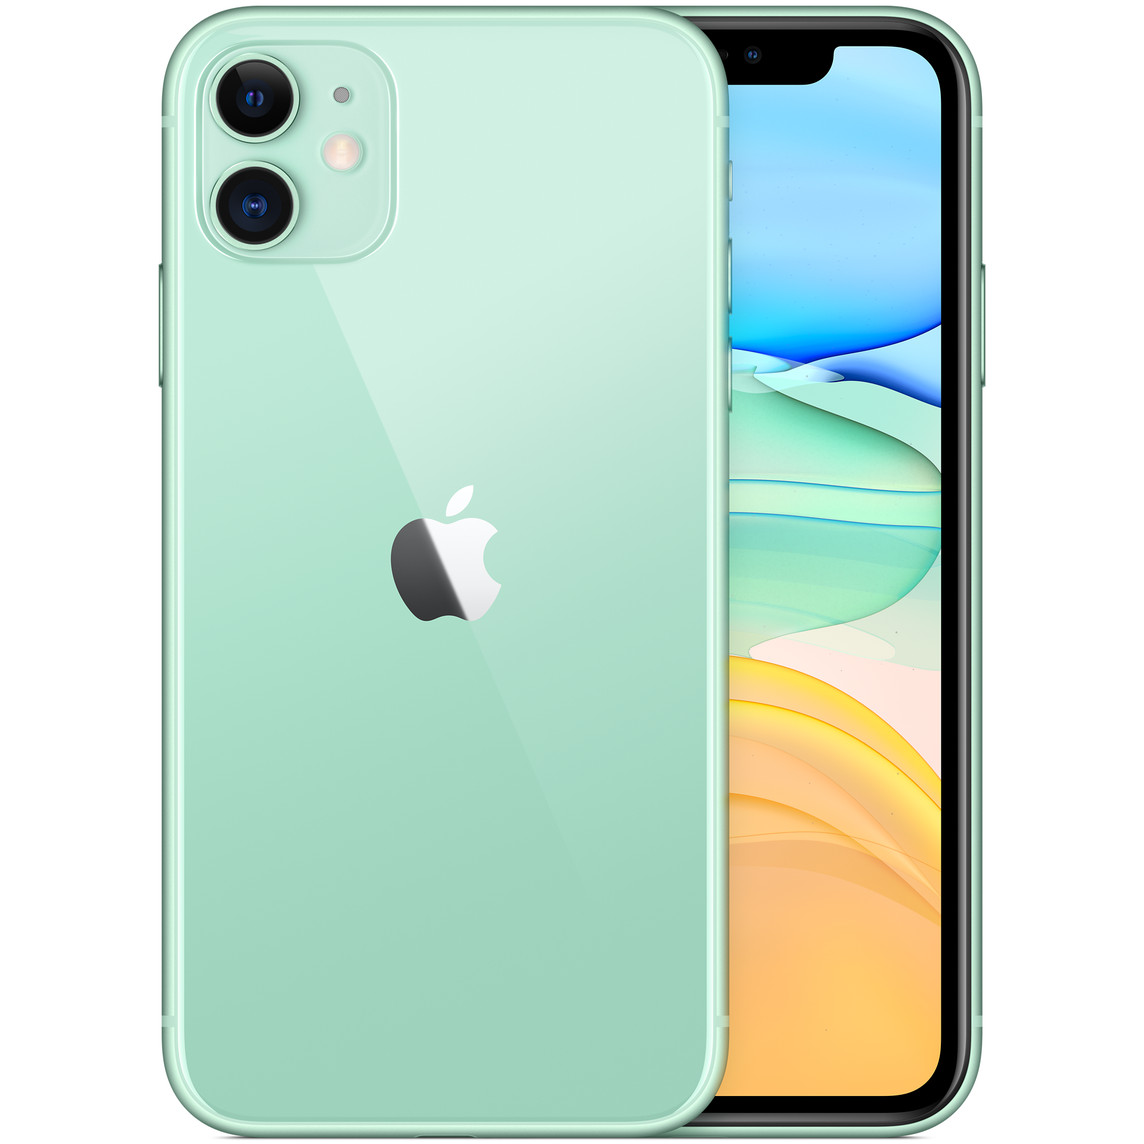 Apple iPhone 11 64 GB Green MWLY2 B 2BMWLY200551